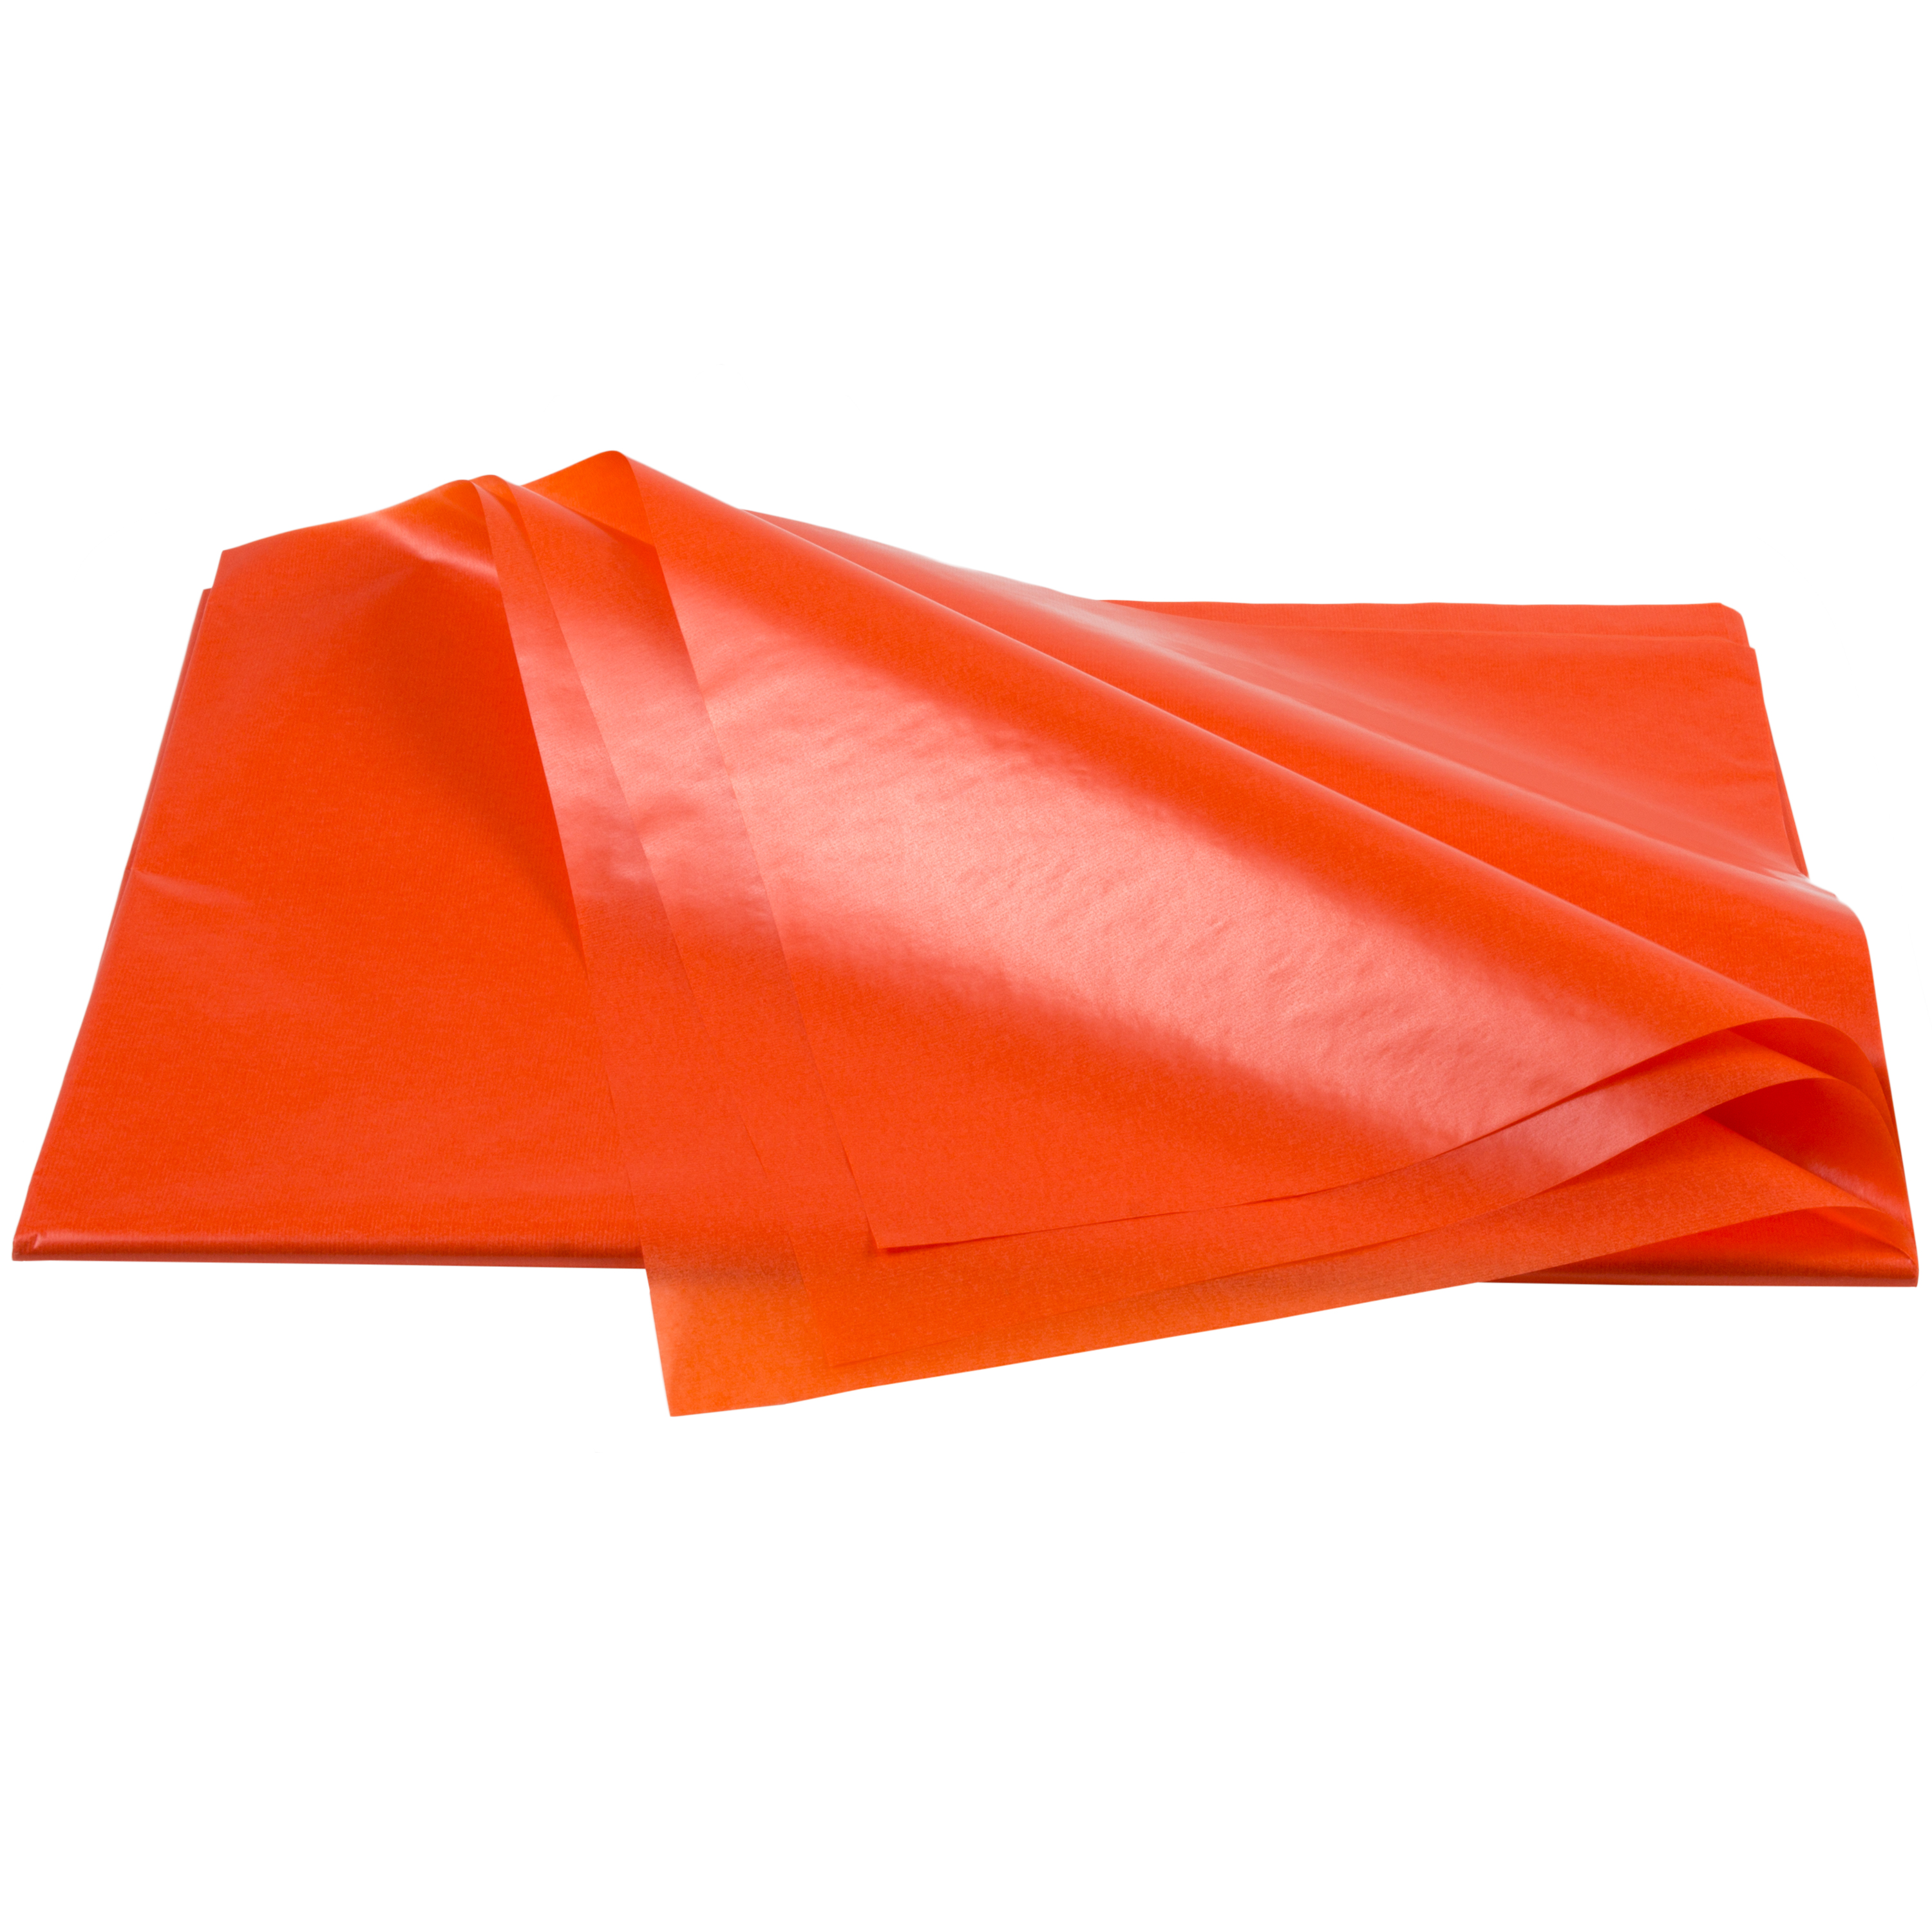 Transparentpapier orange, 42 g/m², 25 Bögen